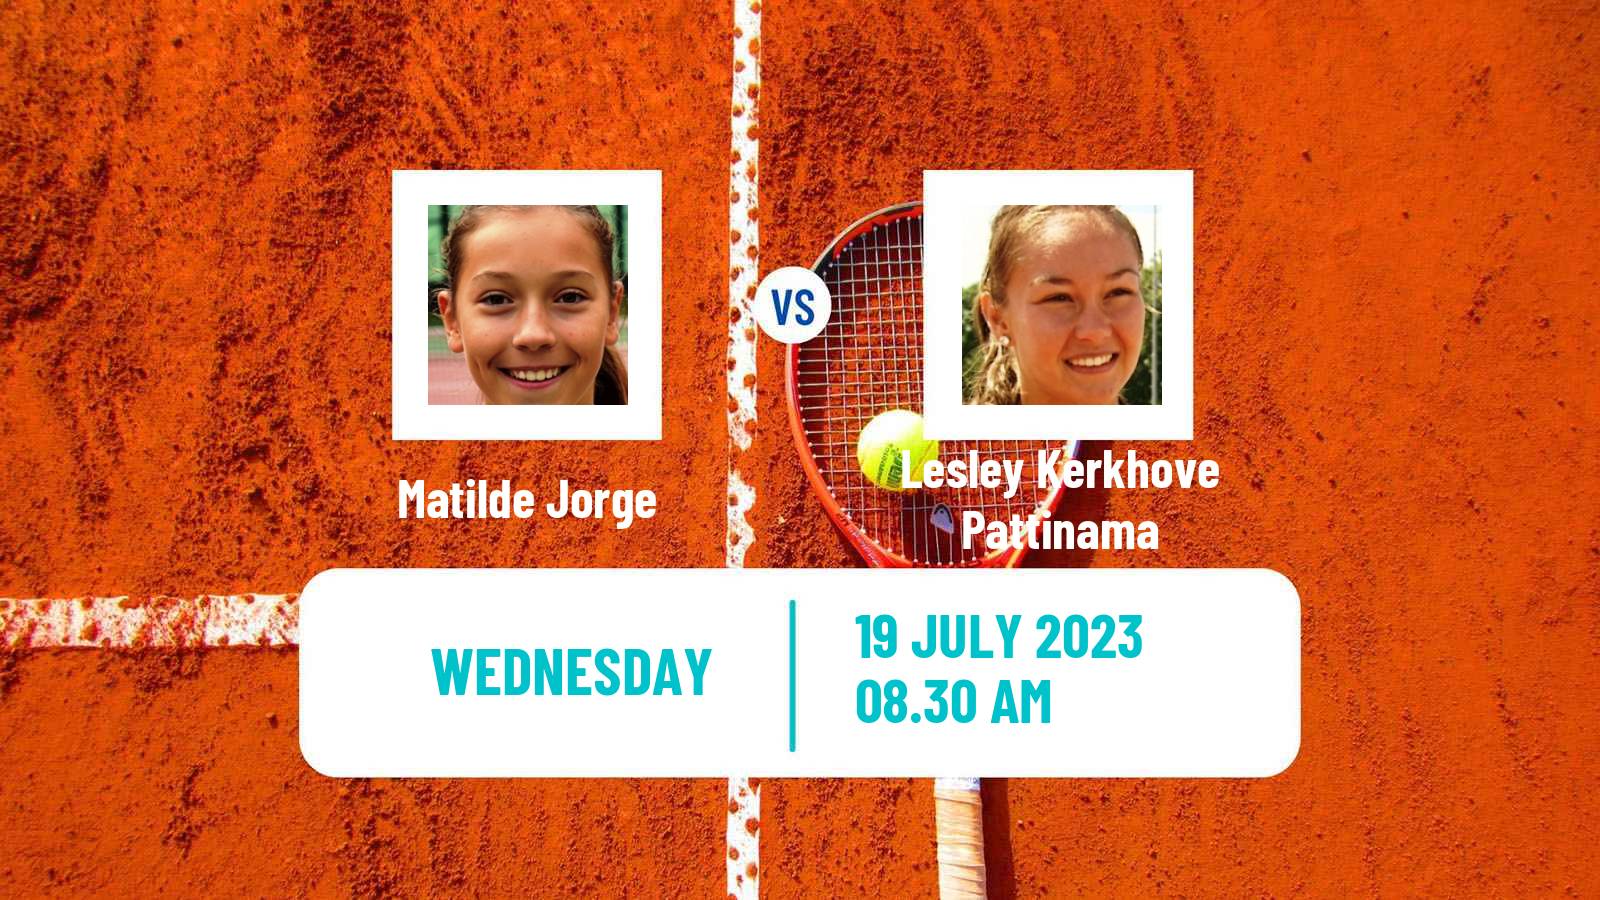 Tennis ITF W40 Porto 3 Women Matilde Jorge - Lesley Kerkhove Pattinama